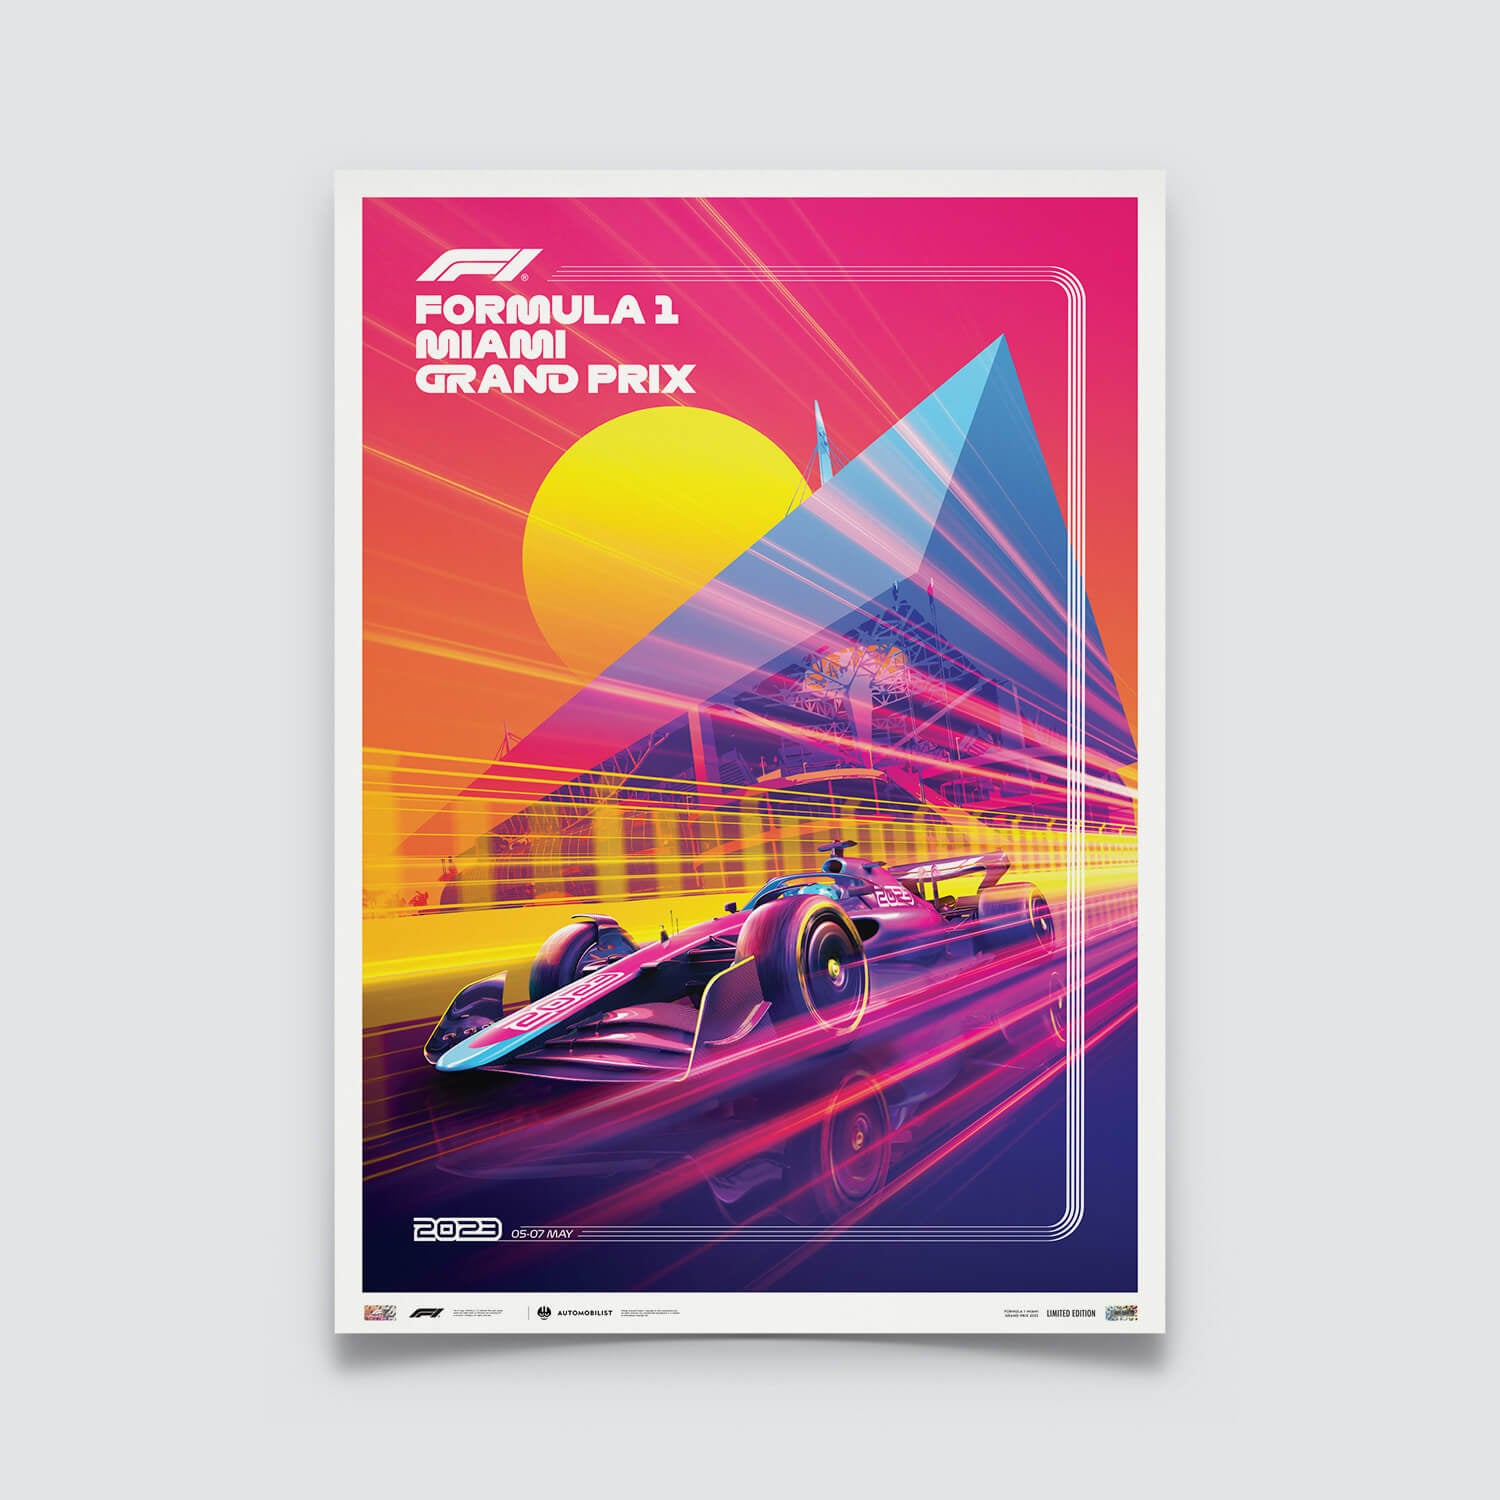 F1 Schedule 2022 - Official Calendar of Grand Prix Races